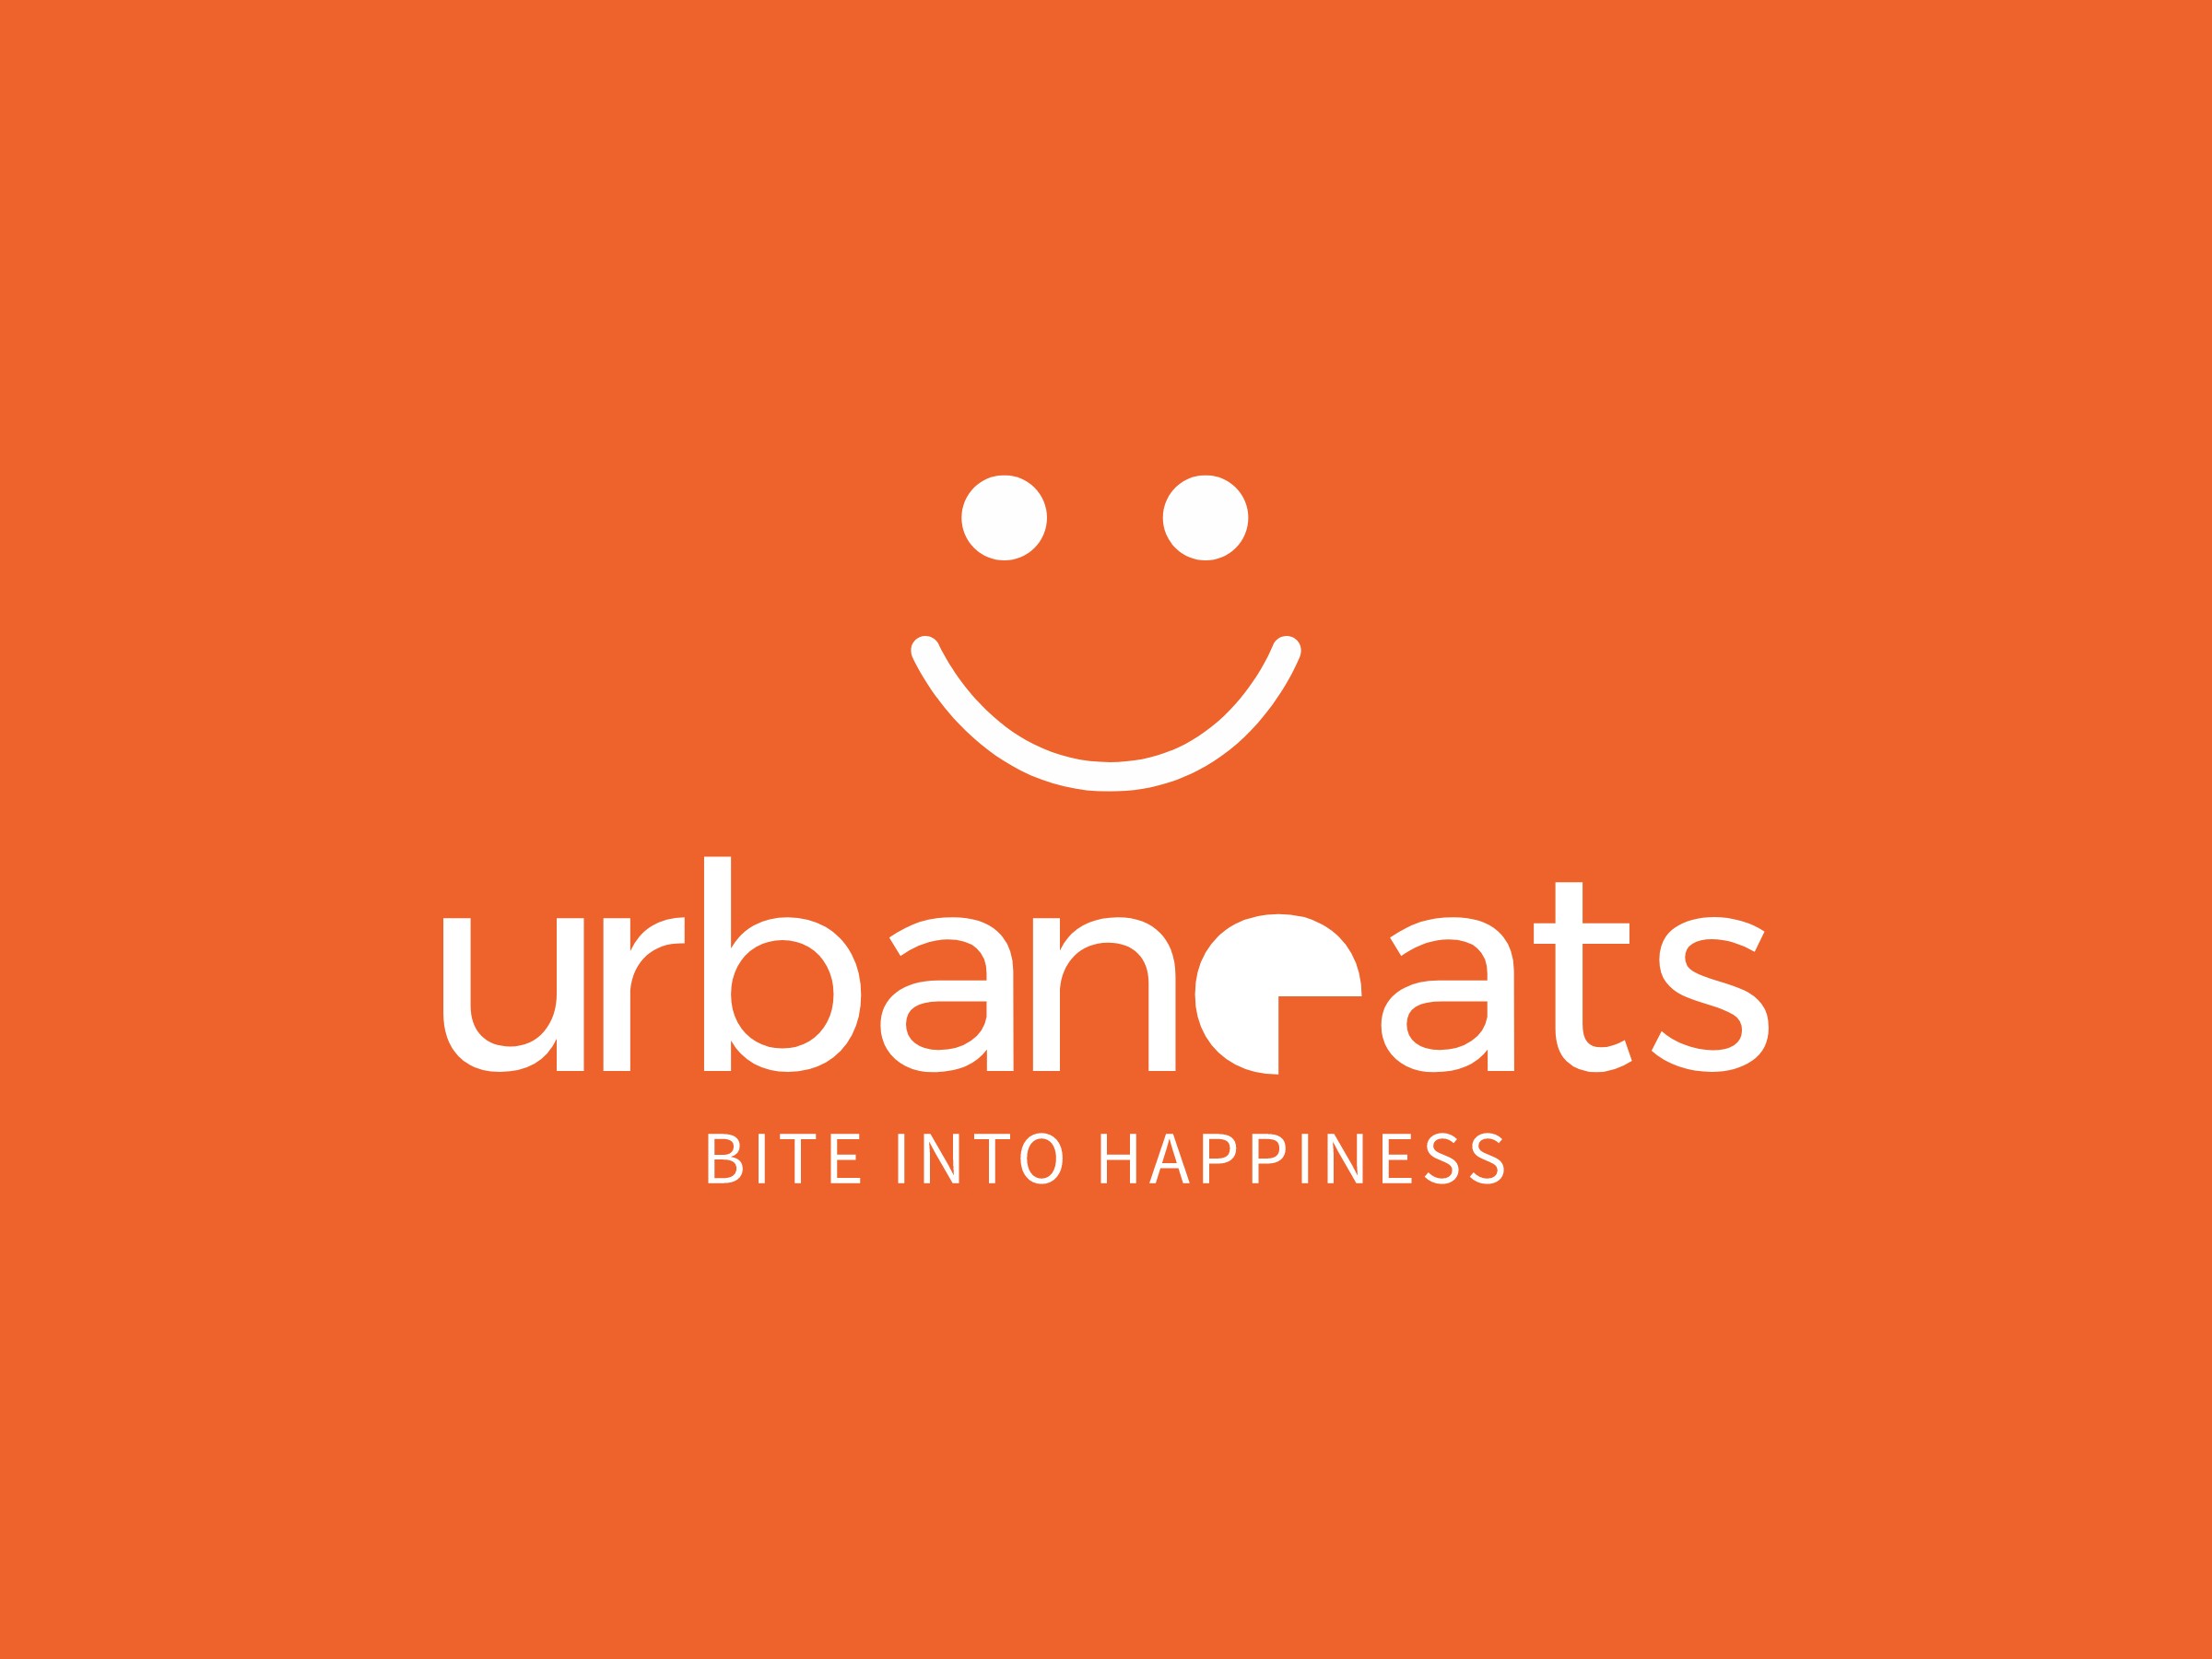 urbaneats - bite into happiness